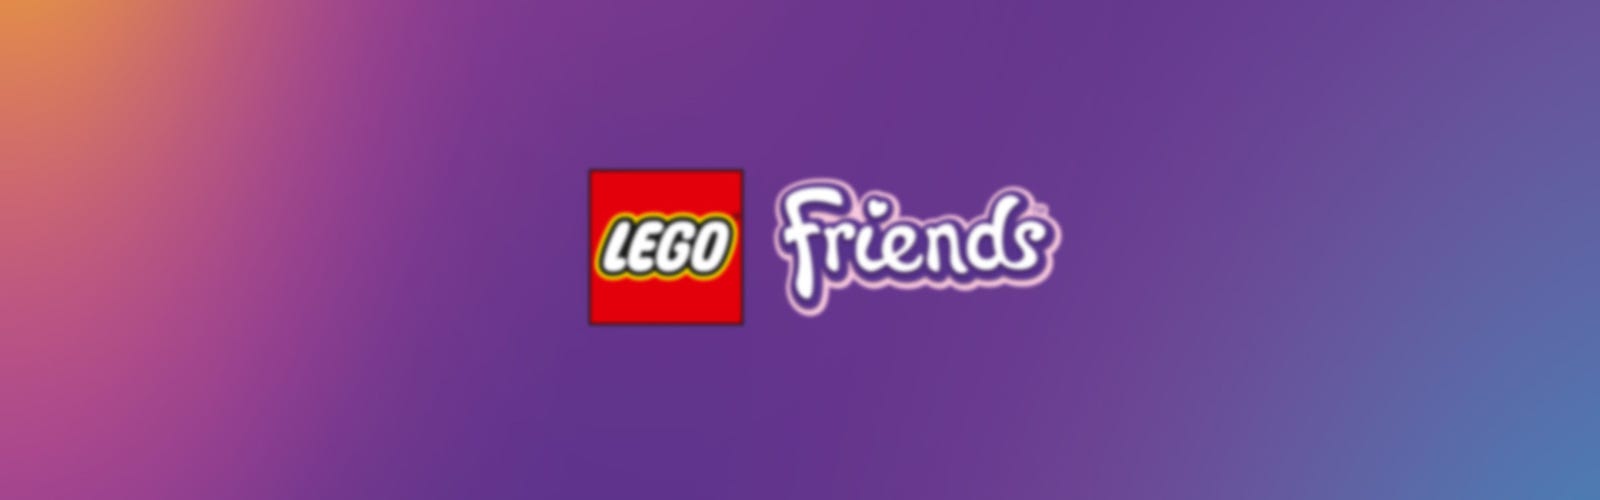 LEGO® Friends Ice-Cream Truck Toy 4+ Set, 41715